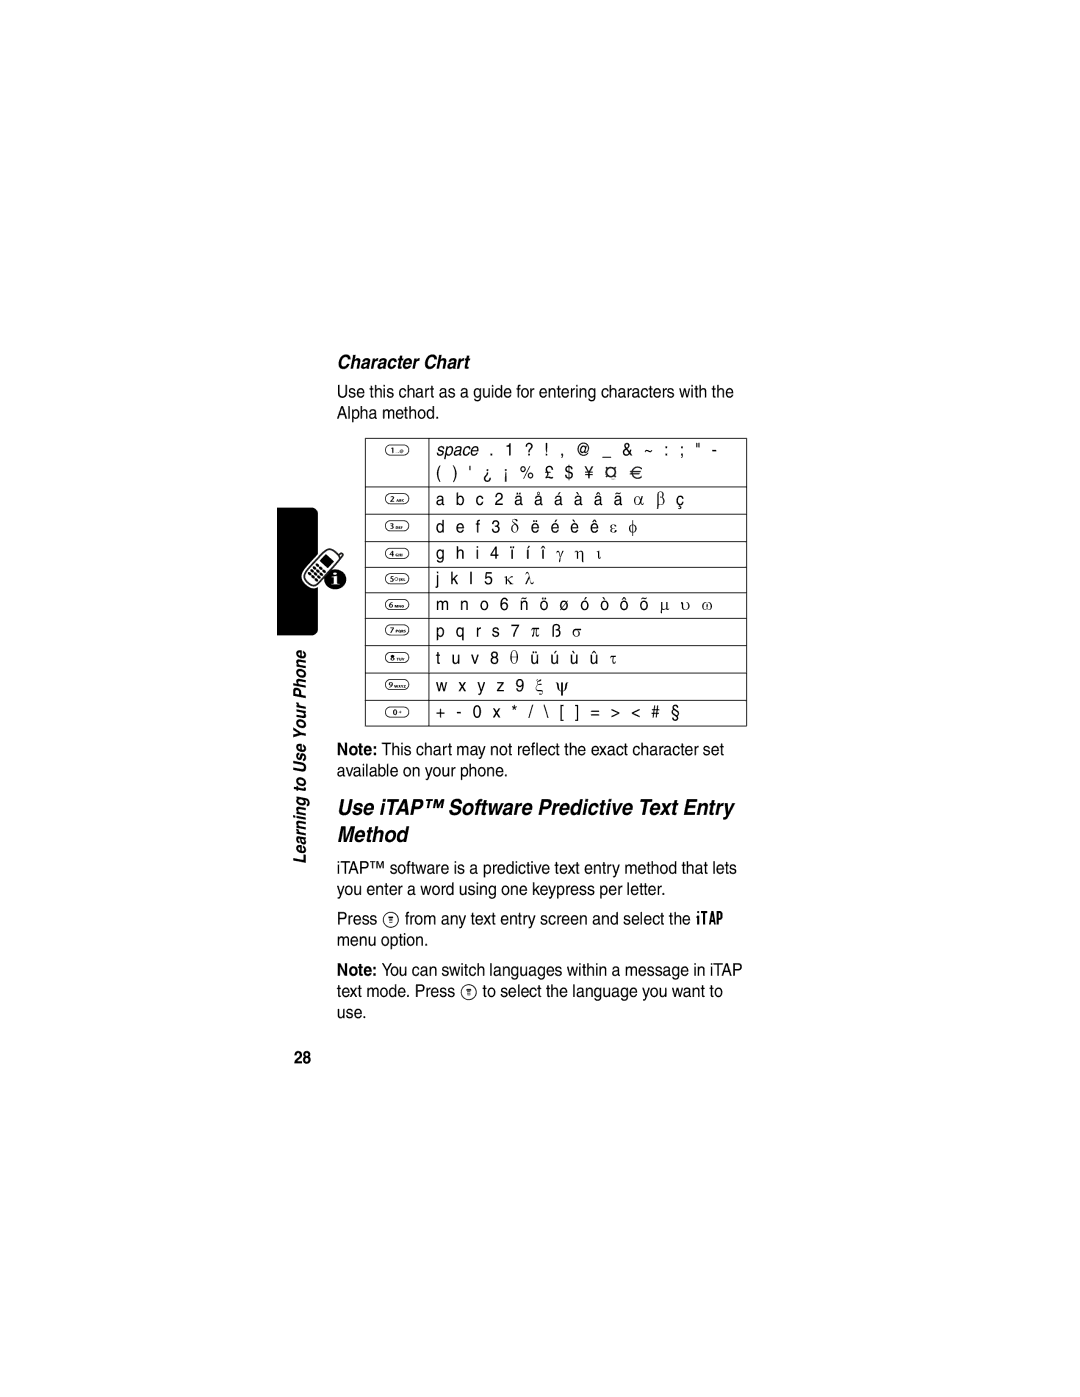 Motorola C353 manual Use iTAP Software Predictive Text Entry Method, Character Chart 